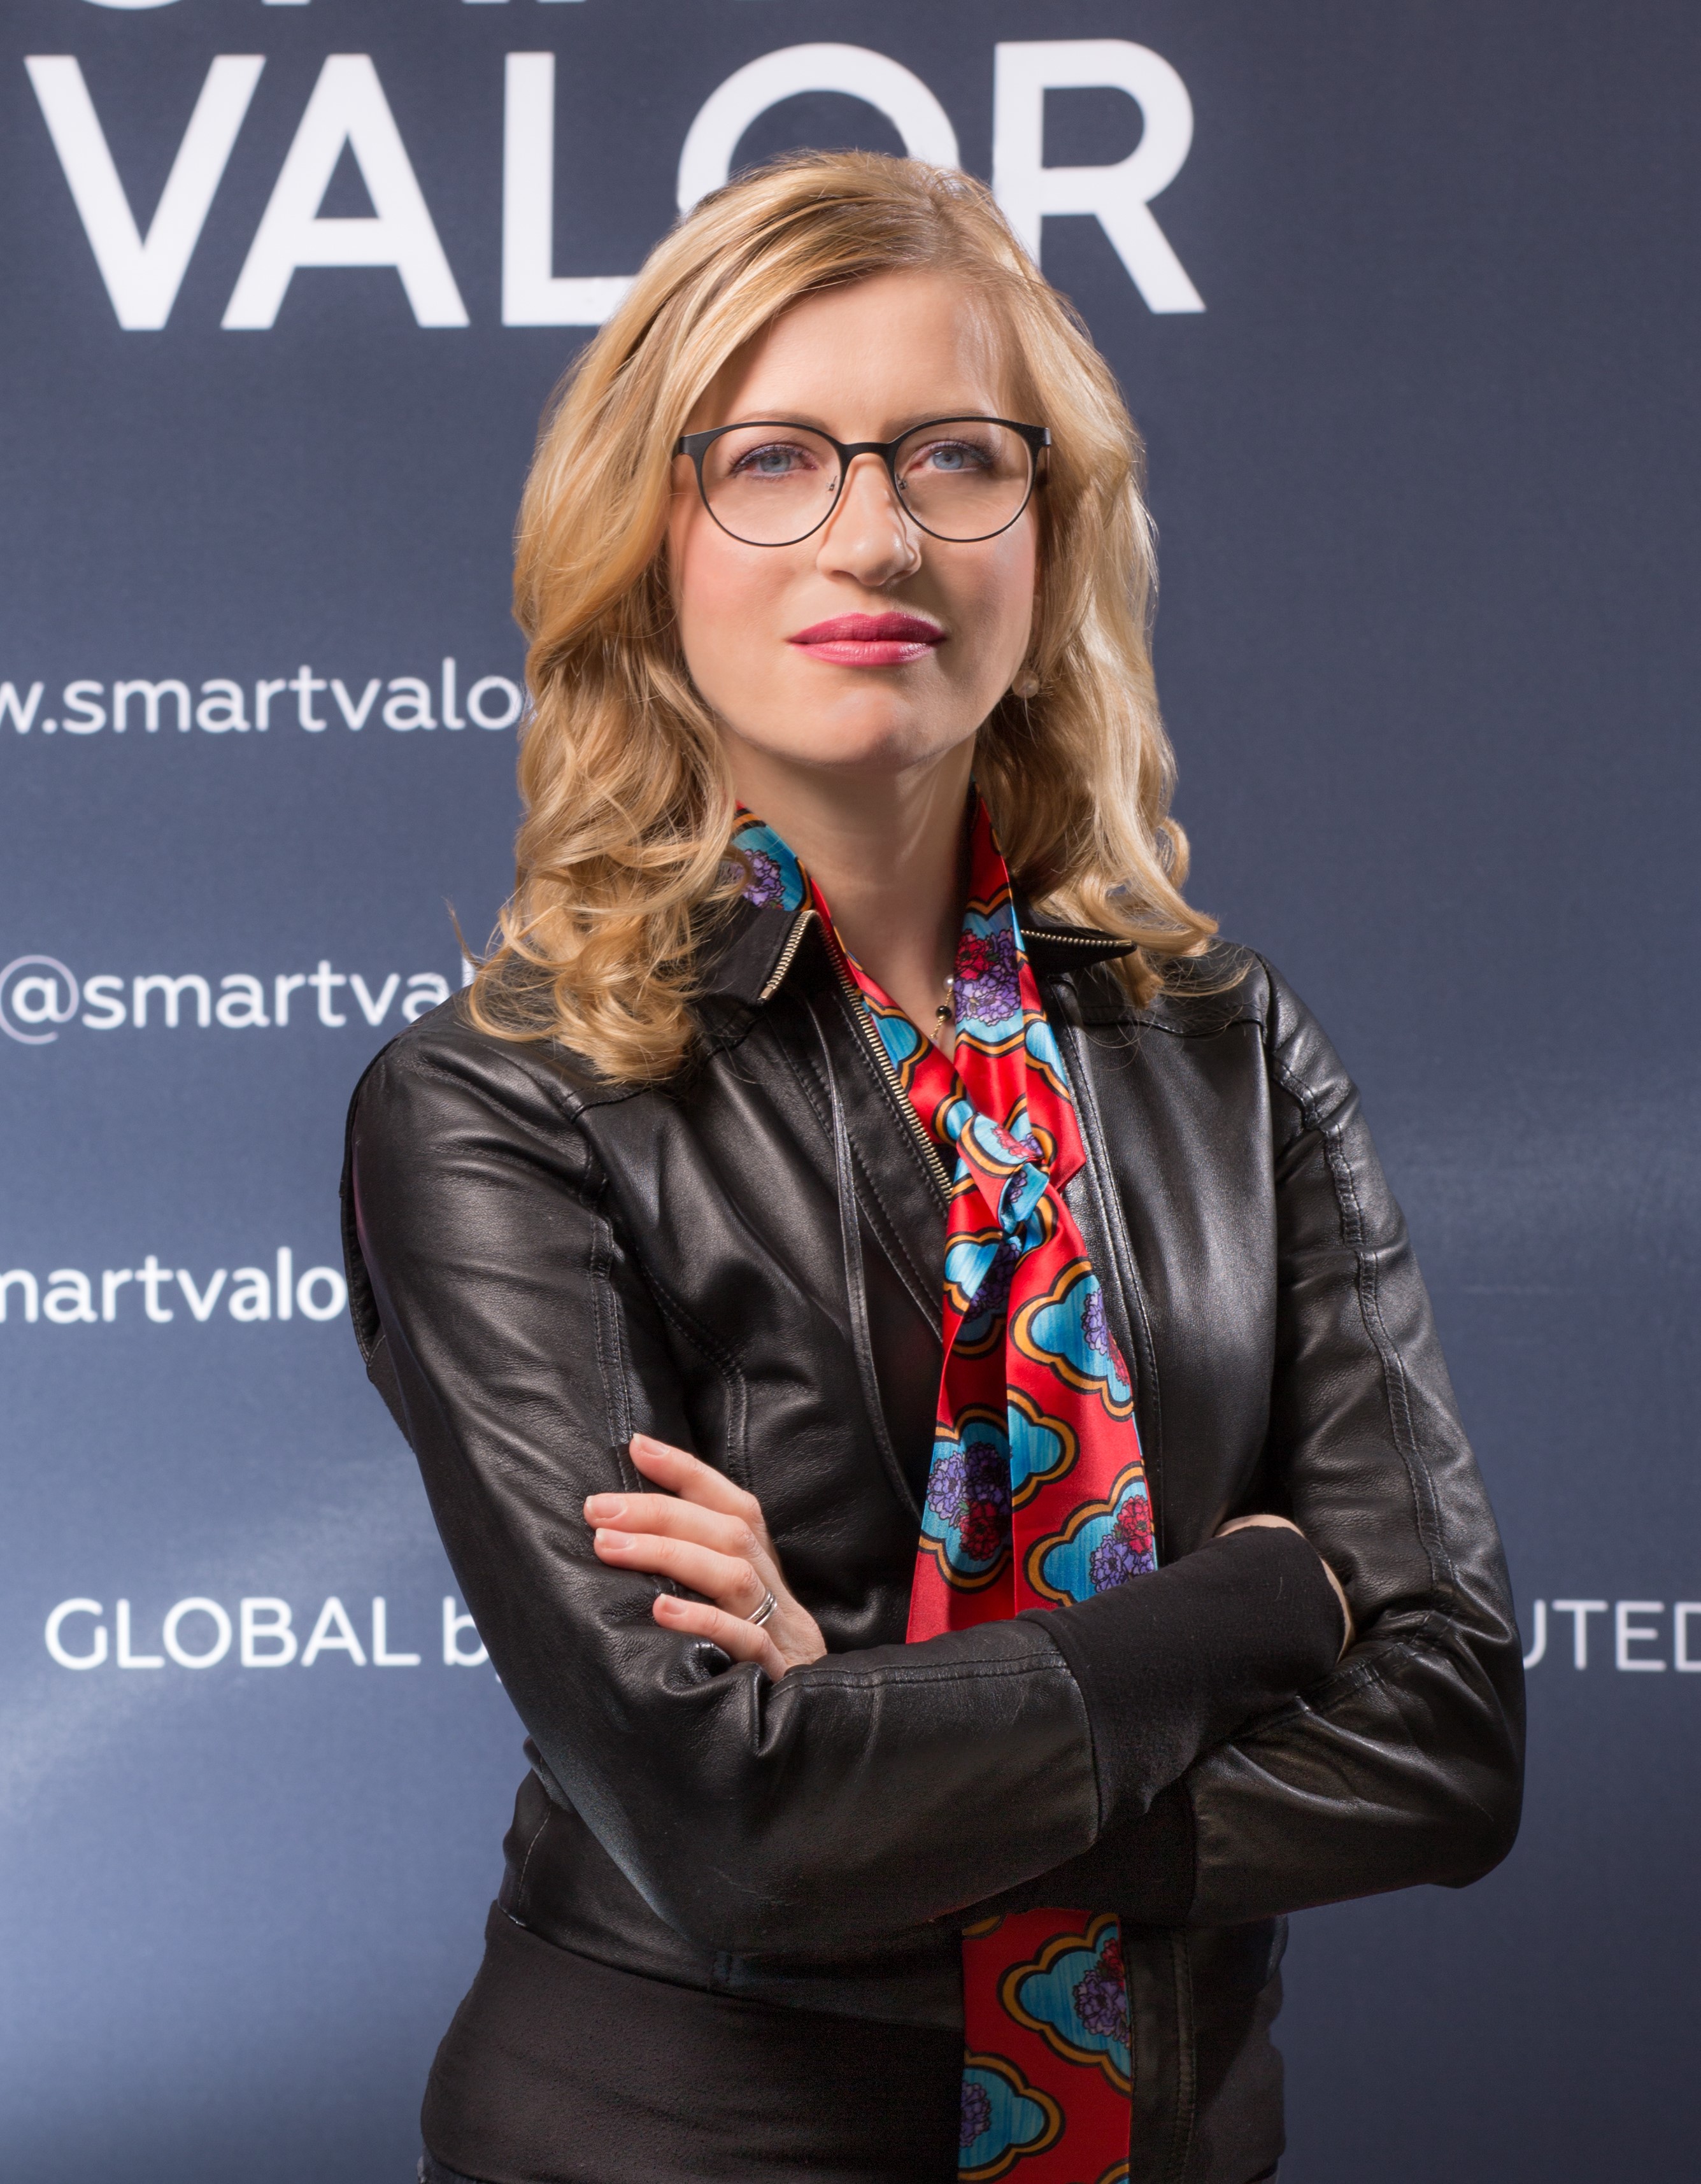 Olga Feldmeier founded Smart Valor, a startup focused on tokenized investments, after beginning her career at established financial firms.